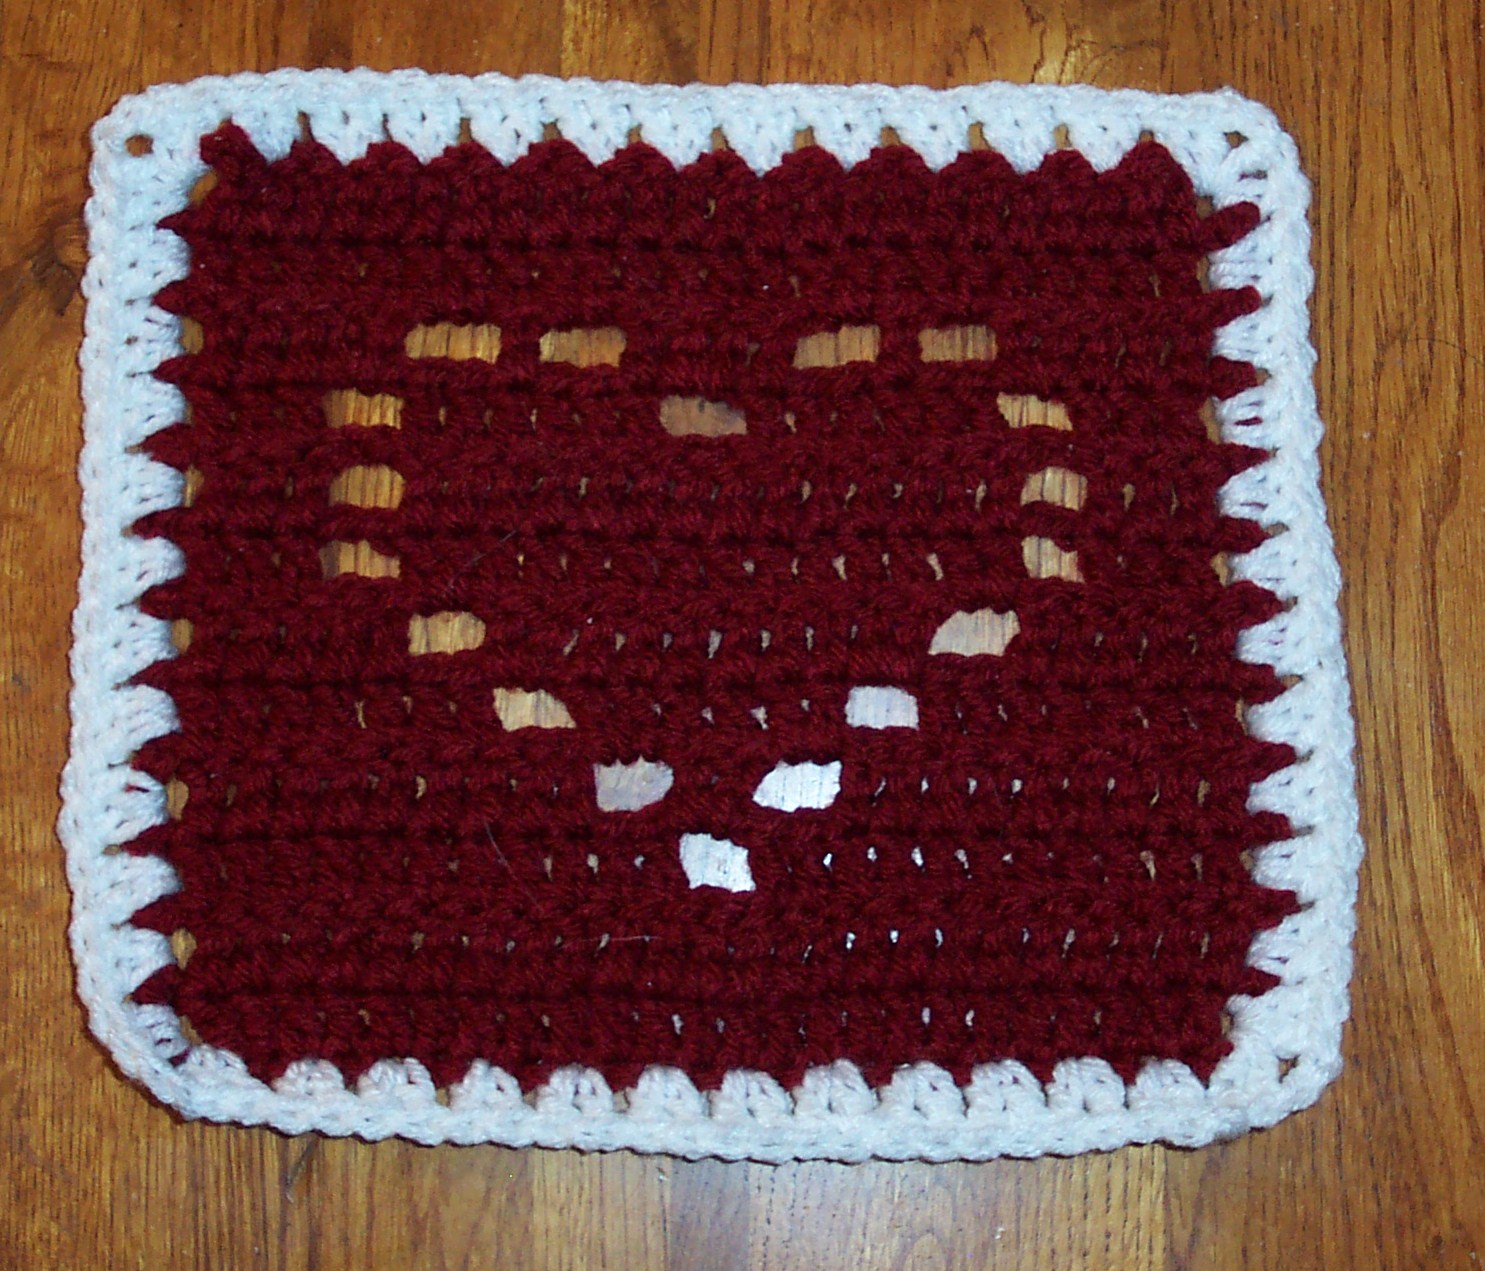 Crochet Pattern Central - Free Afghan Crochet Pattern Link Directory